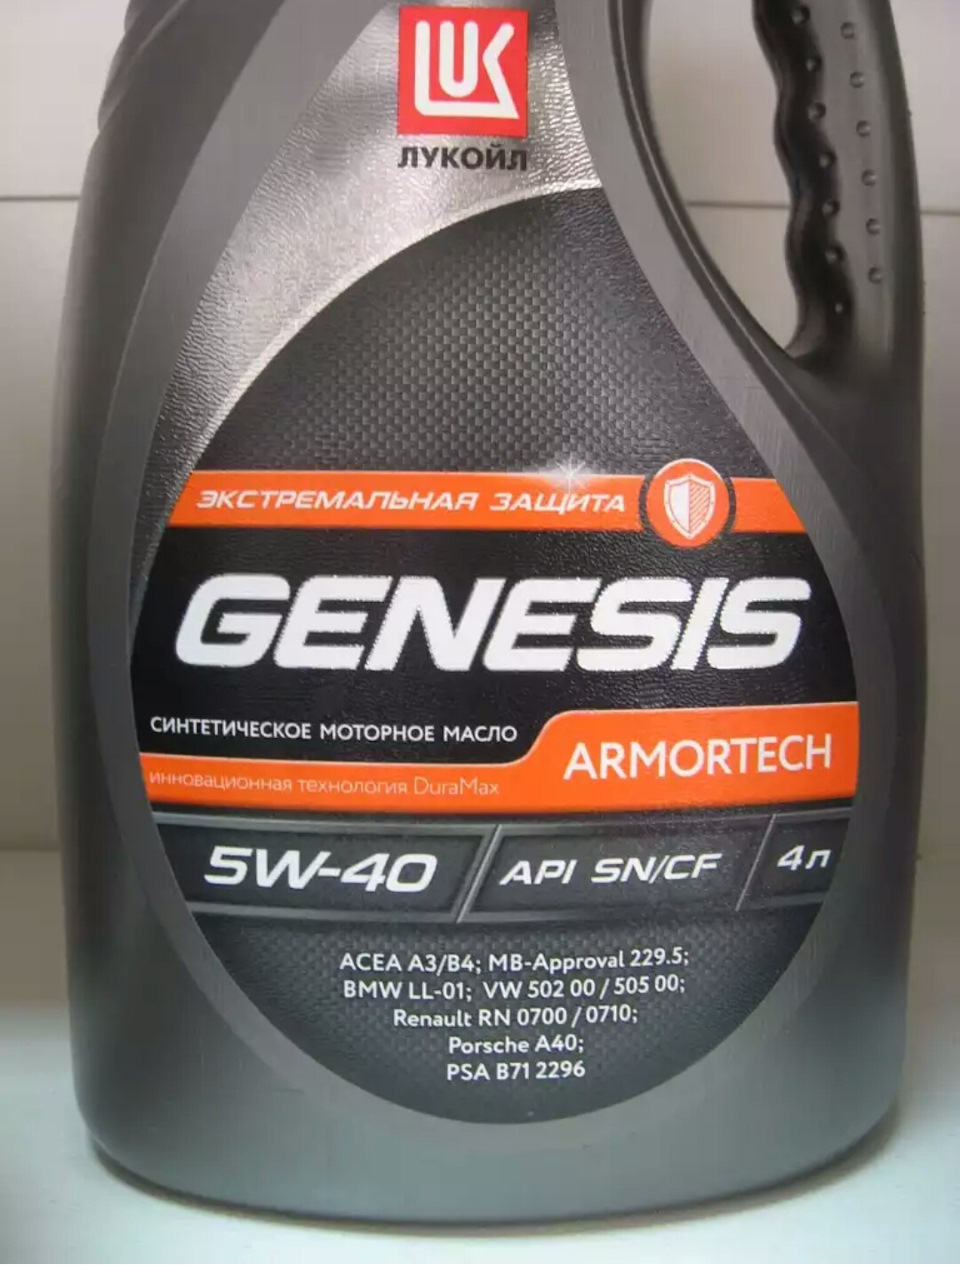 Тест масла лукойл генезис. 5w-40 Genesis Armortech 4л. Genesis Armortech 5w40 SN/CF. Масло Лукойл 5w40 Genesis Armortech. Lukoil Genesis Armortech 5w-40 4л.